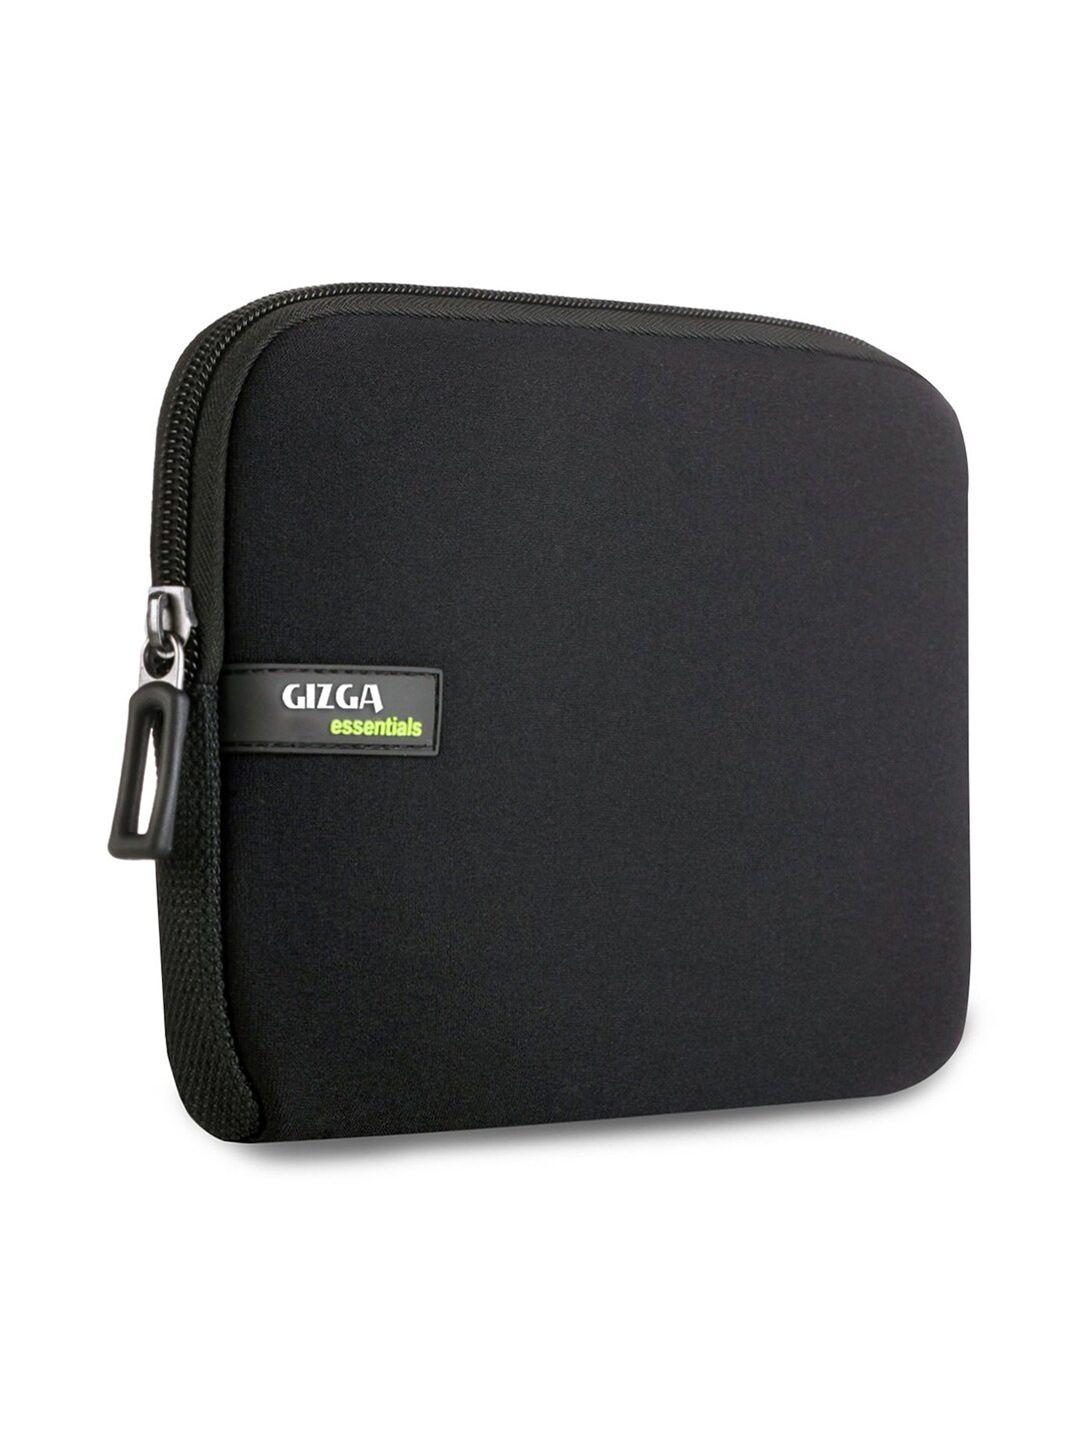 gizga-essentials-soft-inner-lining-8-inch-laptop-sleeve